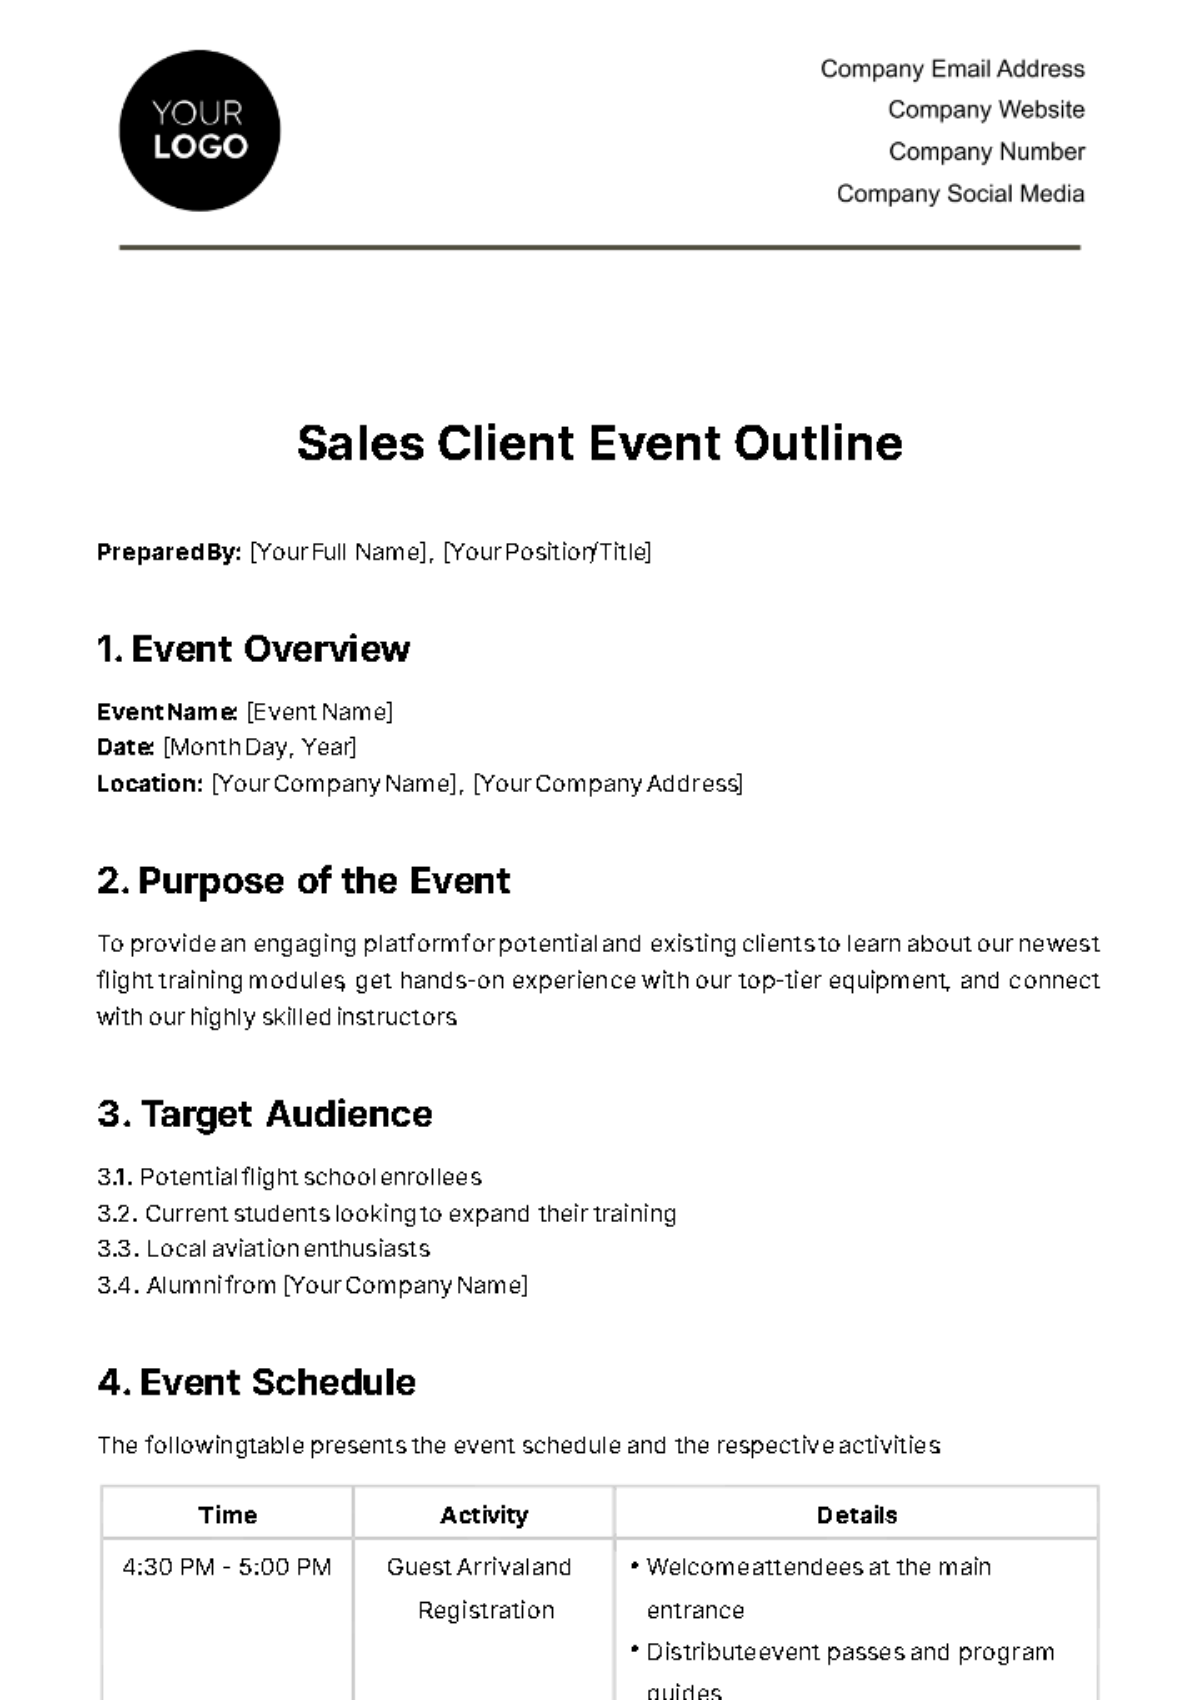 Sales Client Event Outline Template